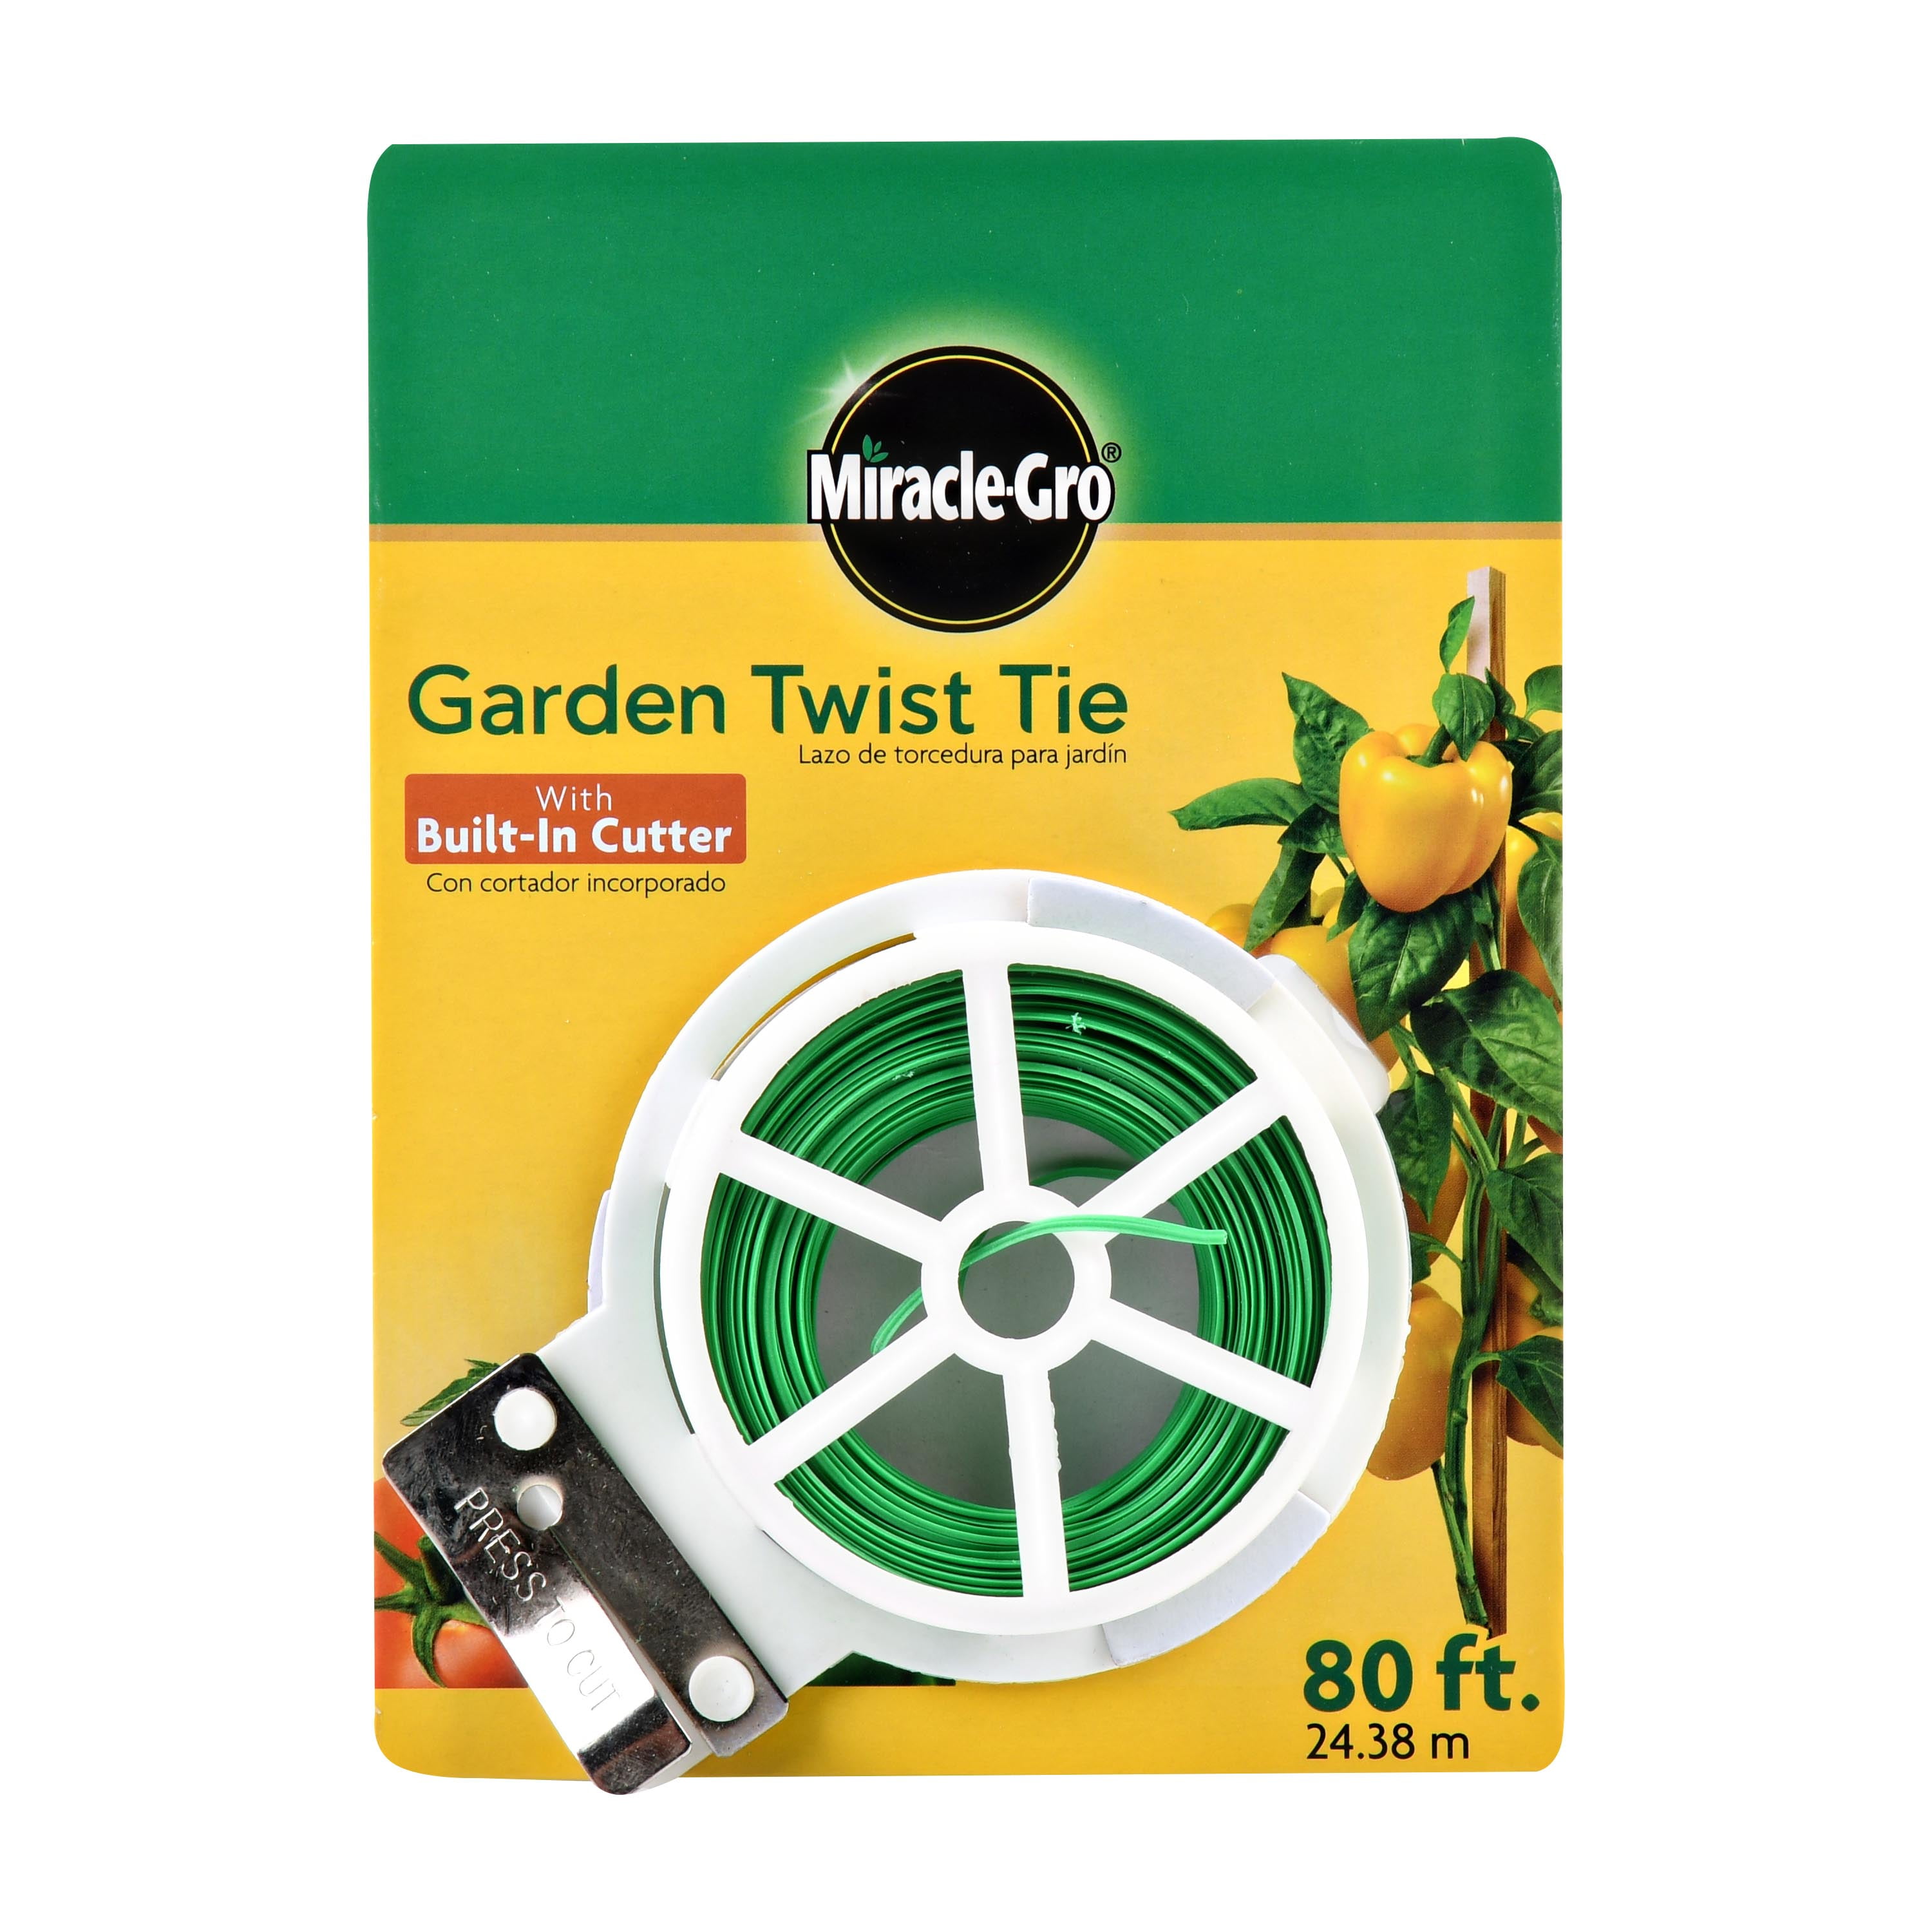 Garden Green Twisty Tie Tine 80m Dispenser With Cutter For Plant and Gardening 